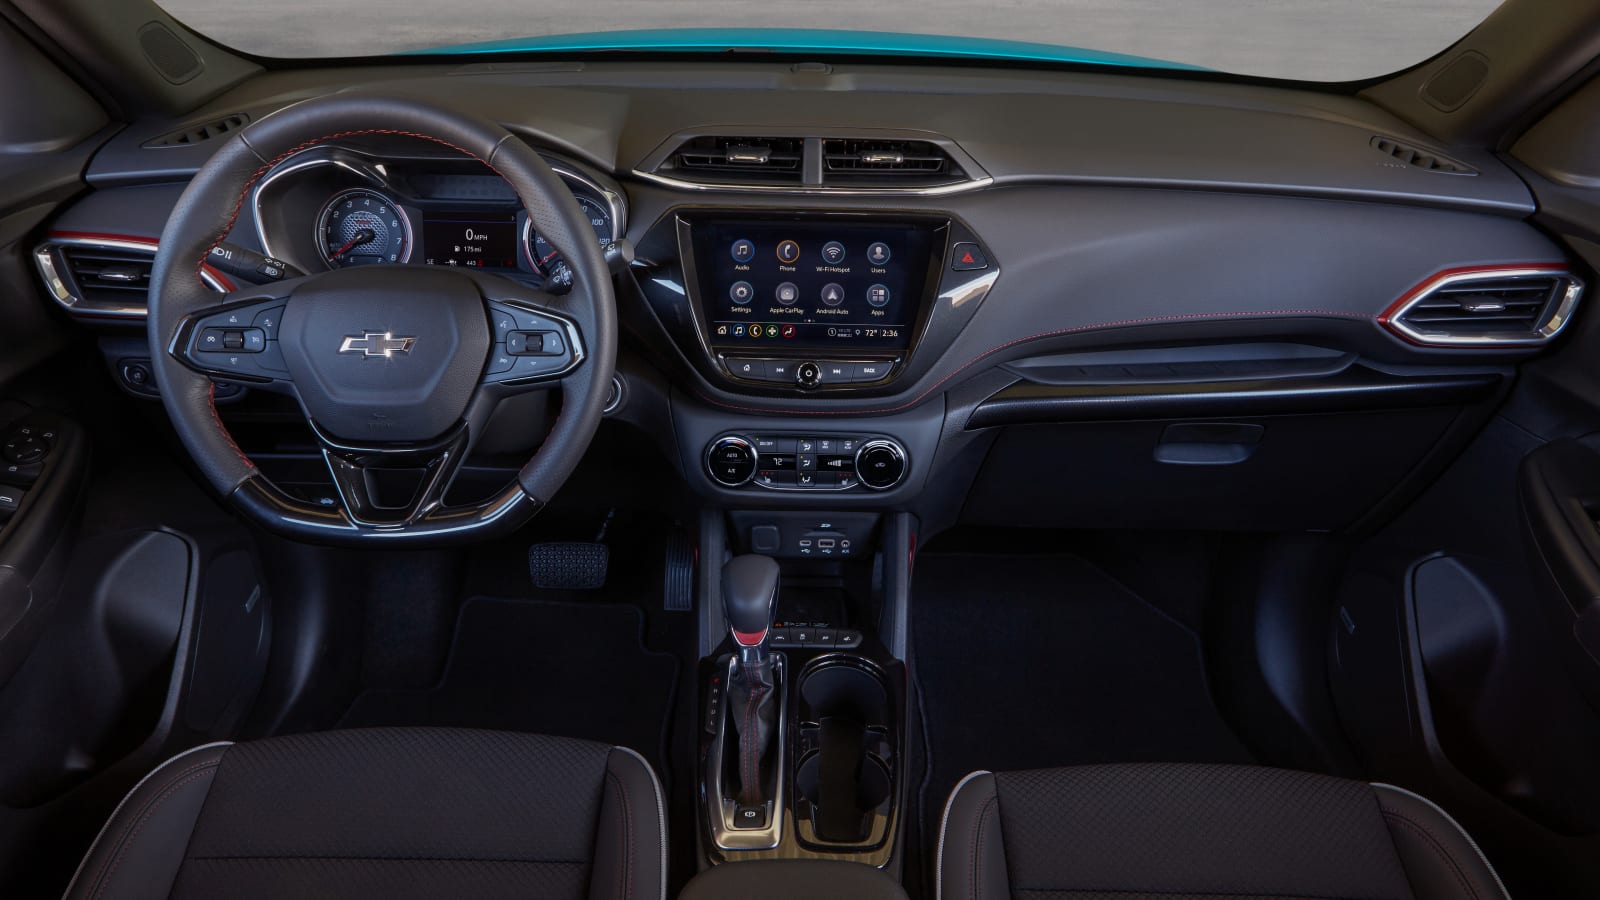 2021 Chevrolet Trailblazer Review | Price, features, specs, photos